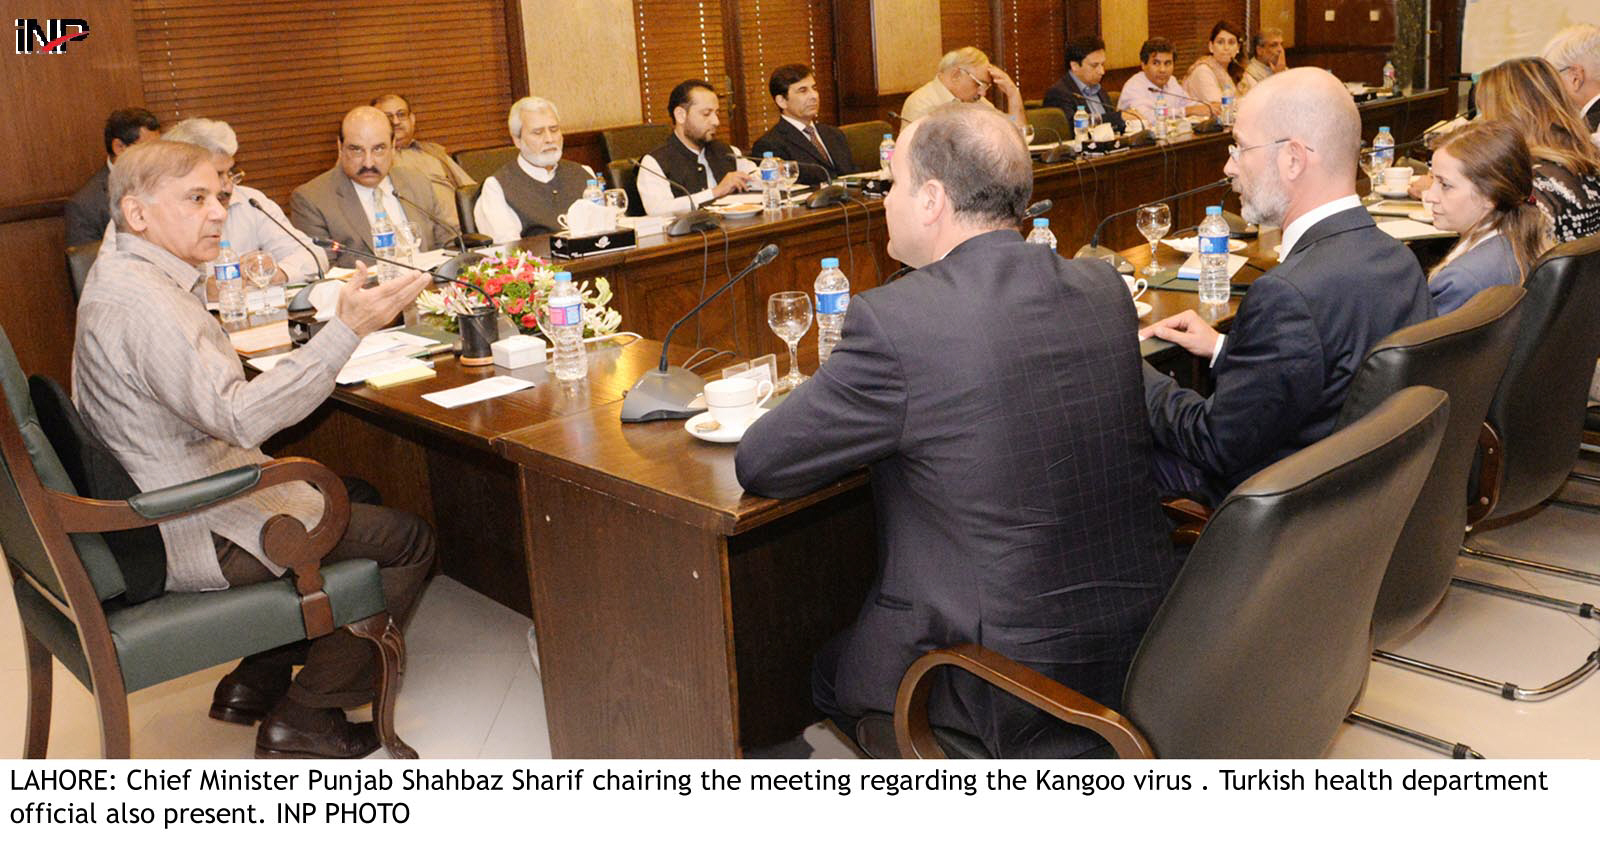 cm punjab shahbaz sharif chairing a meeting